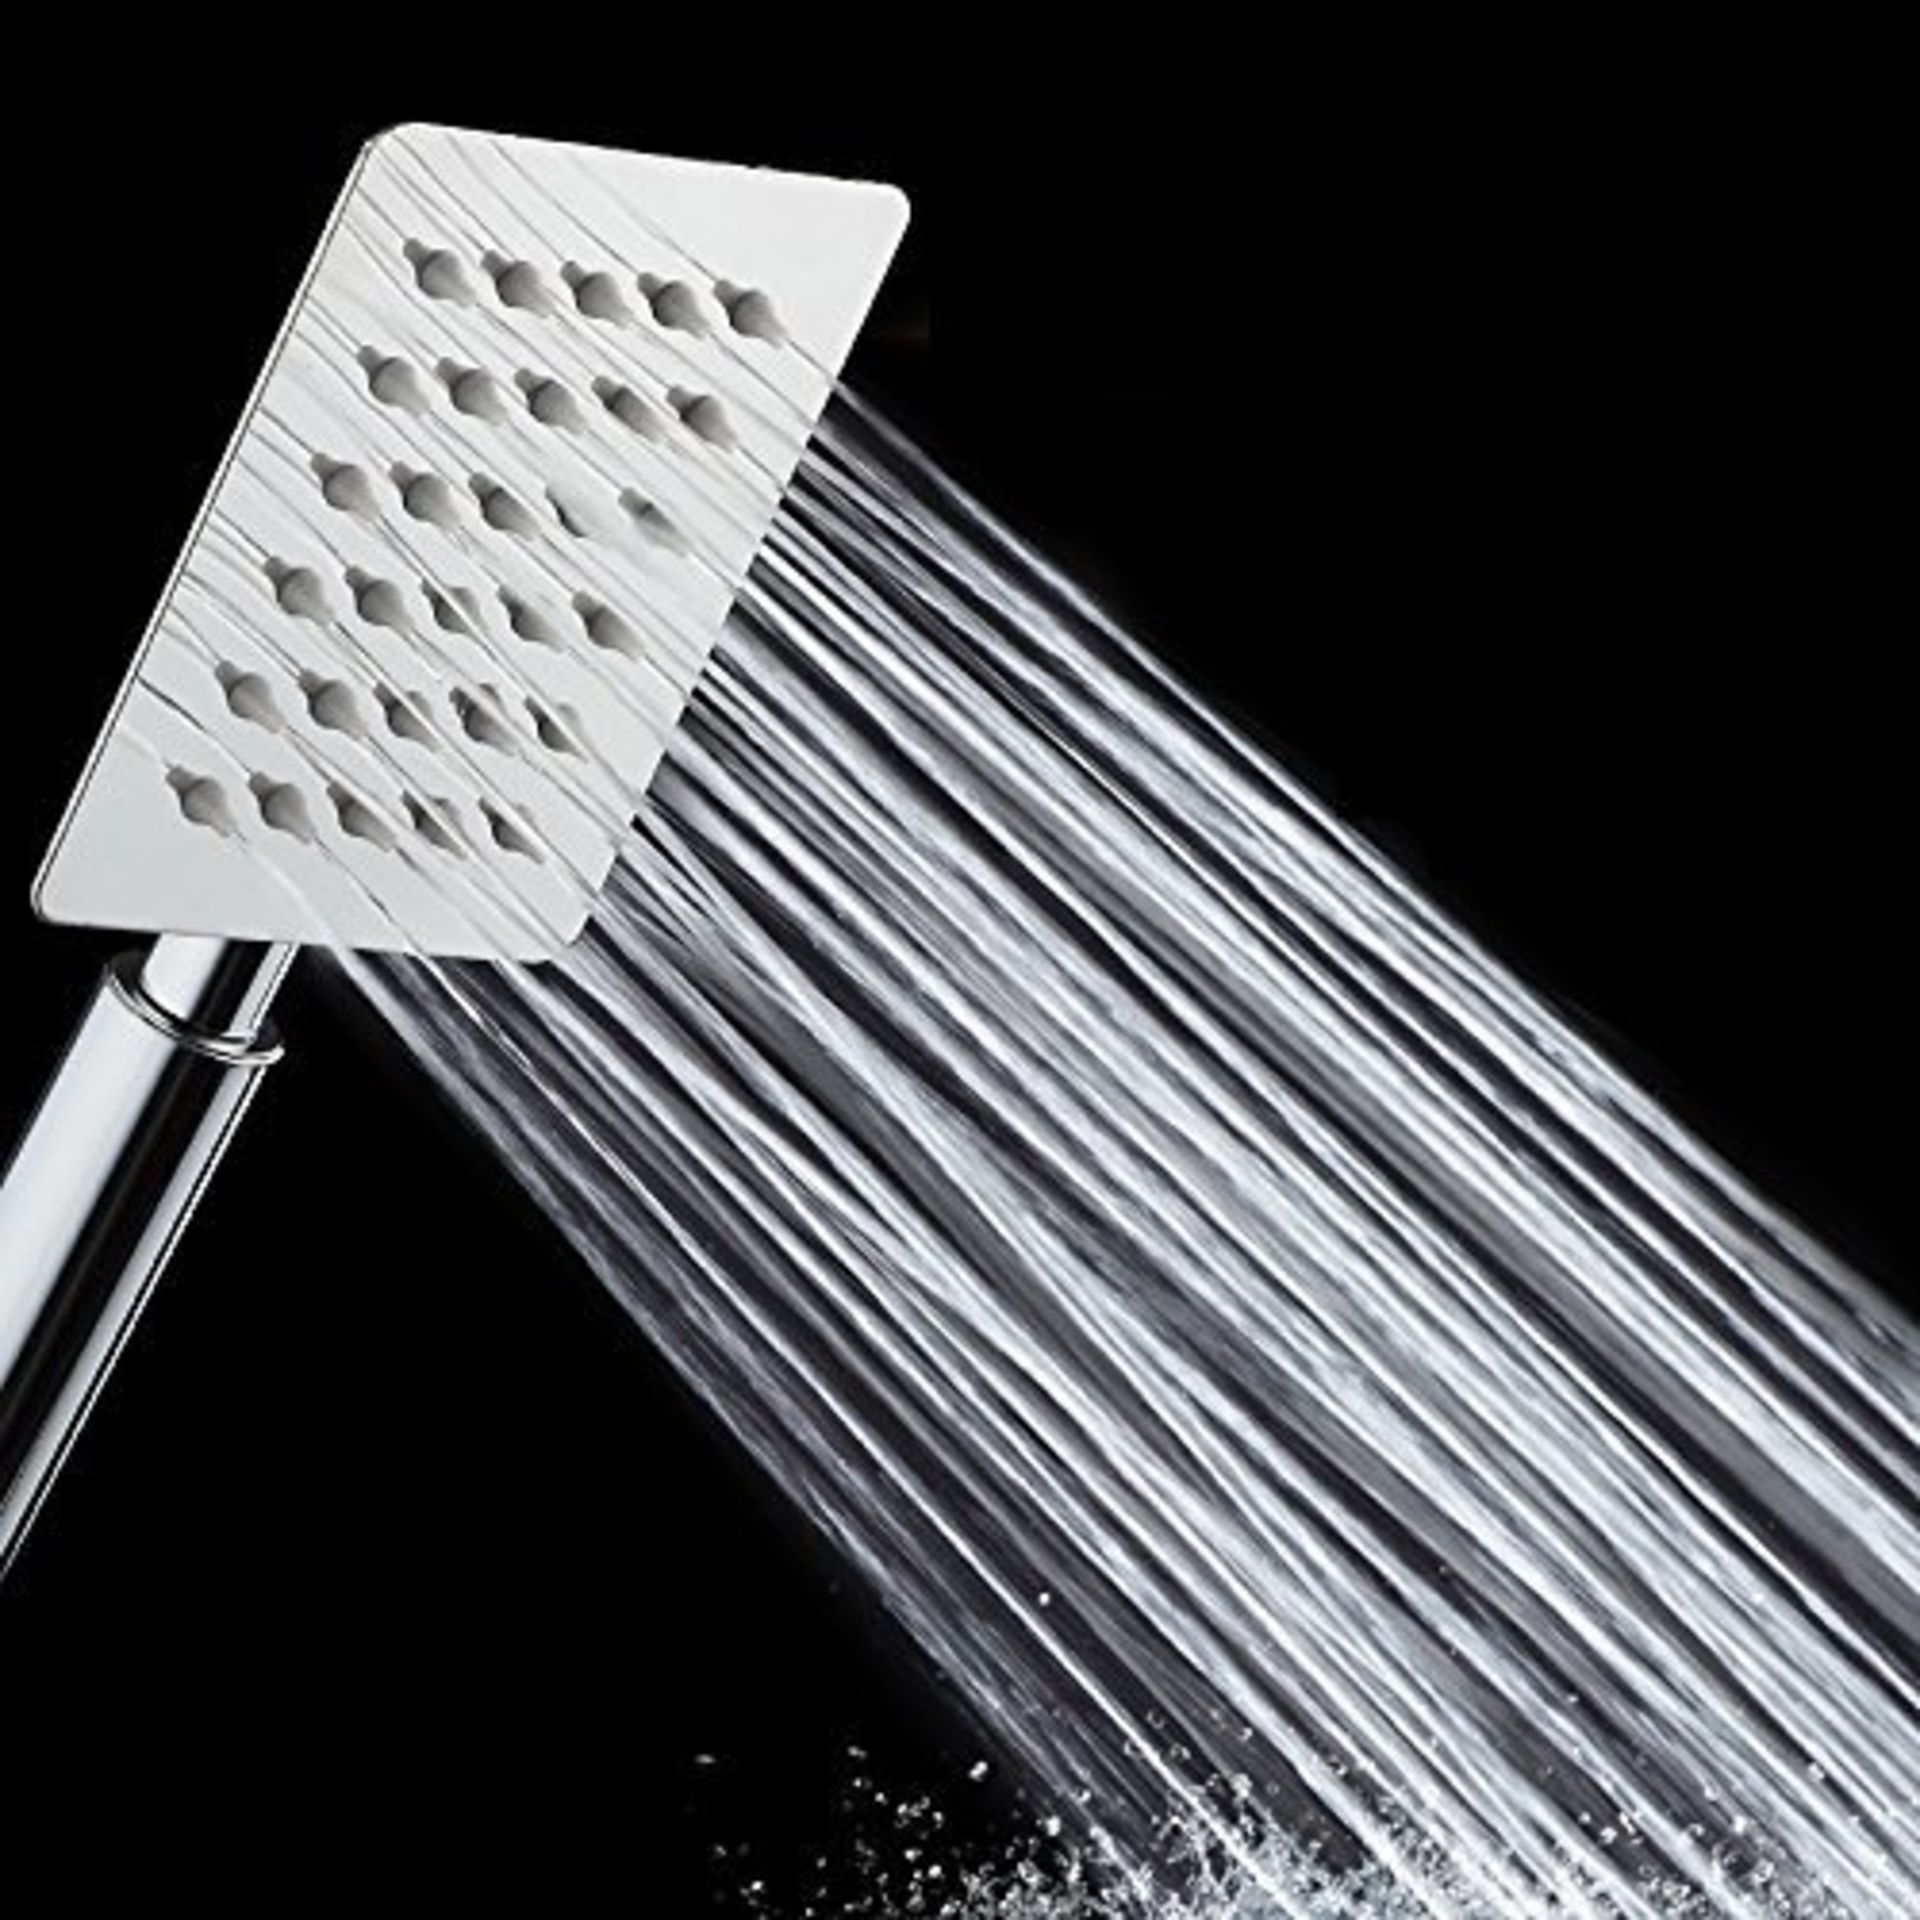 Yolococa Stainless Steel Handheld Shower Head Spray Face Ultra-Thin High Pressure Water-Saving Nozz